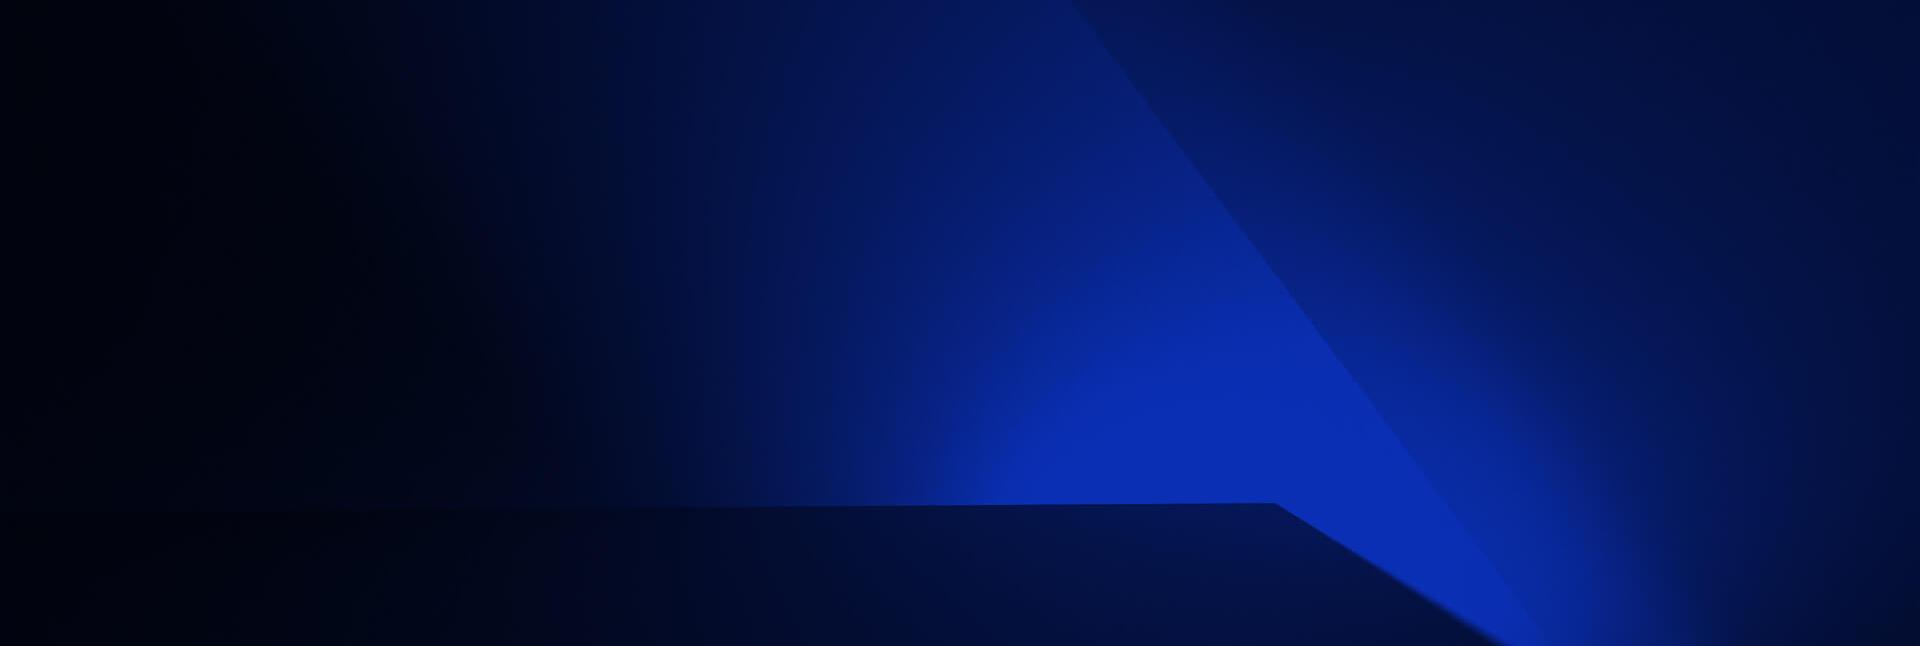 rra-background-blue-7-2021.jpg